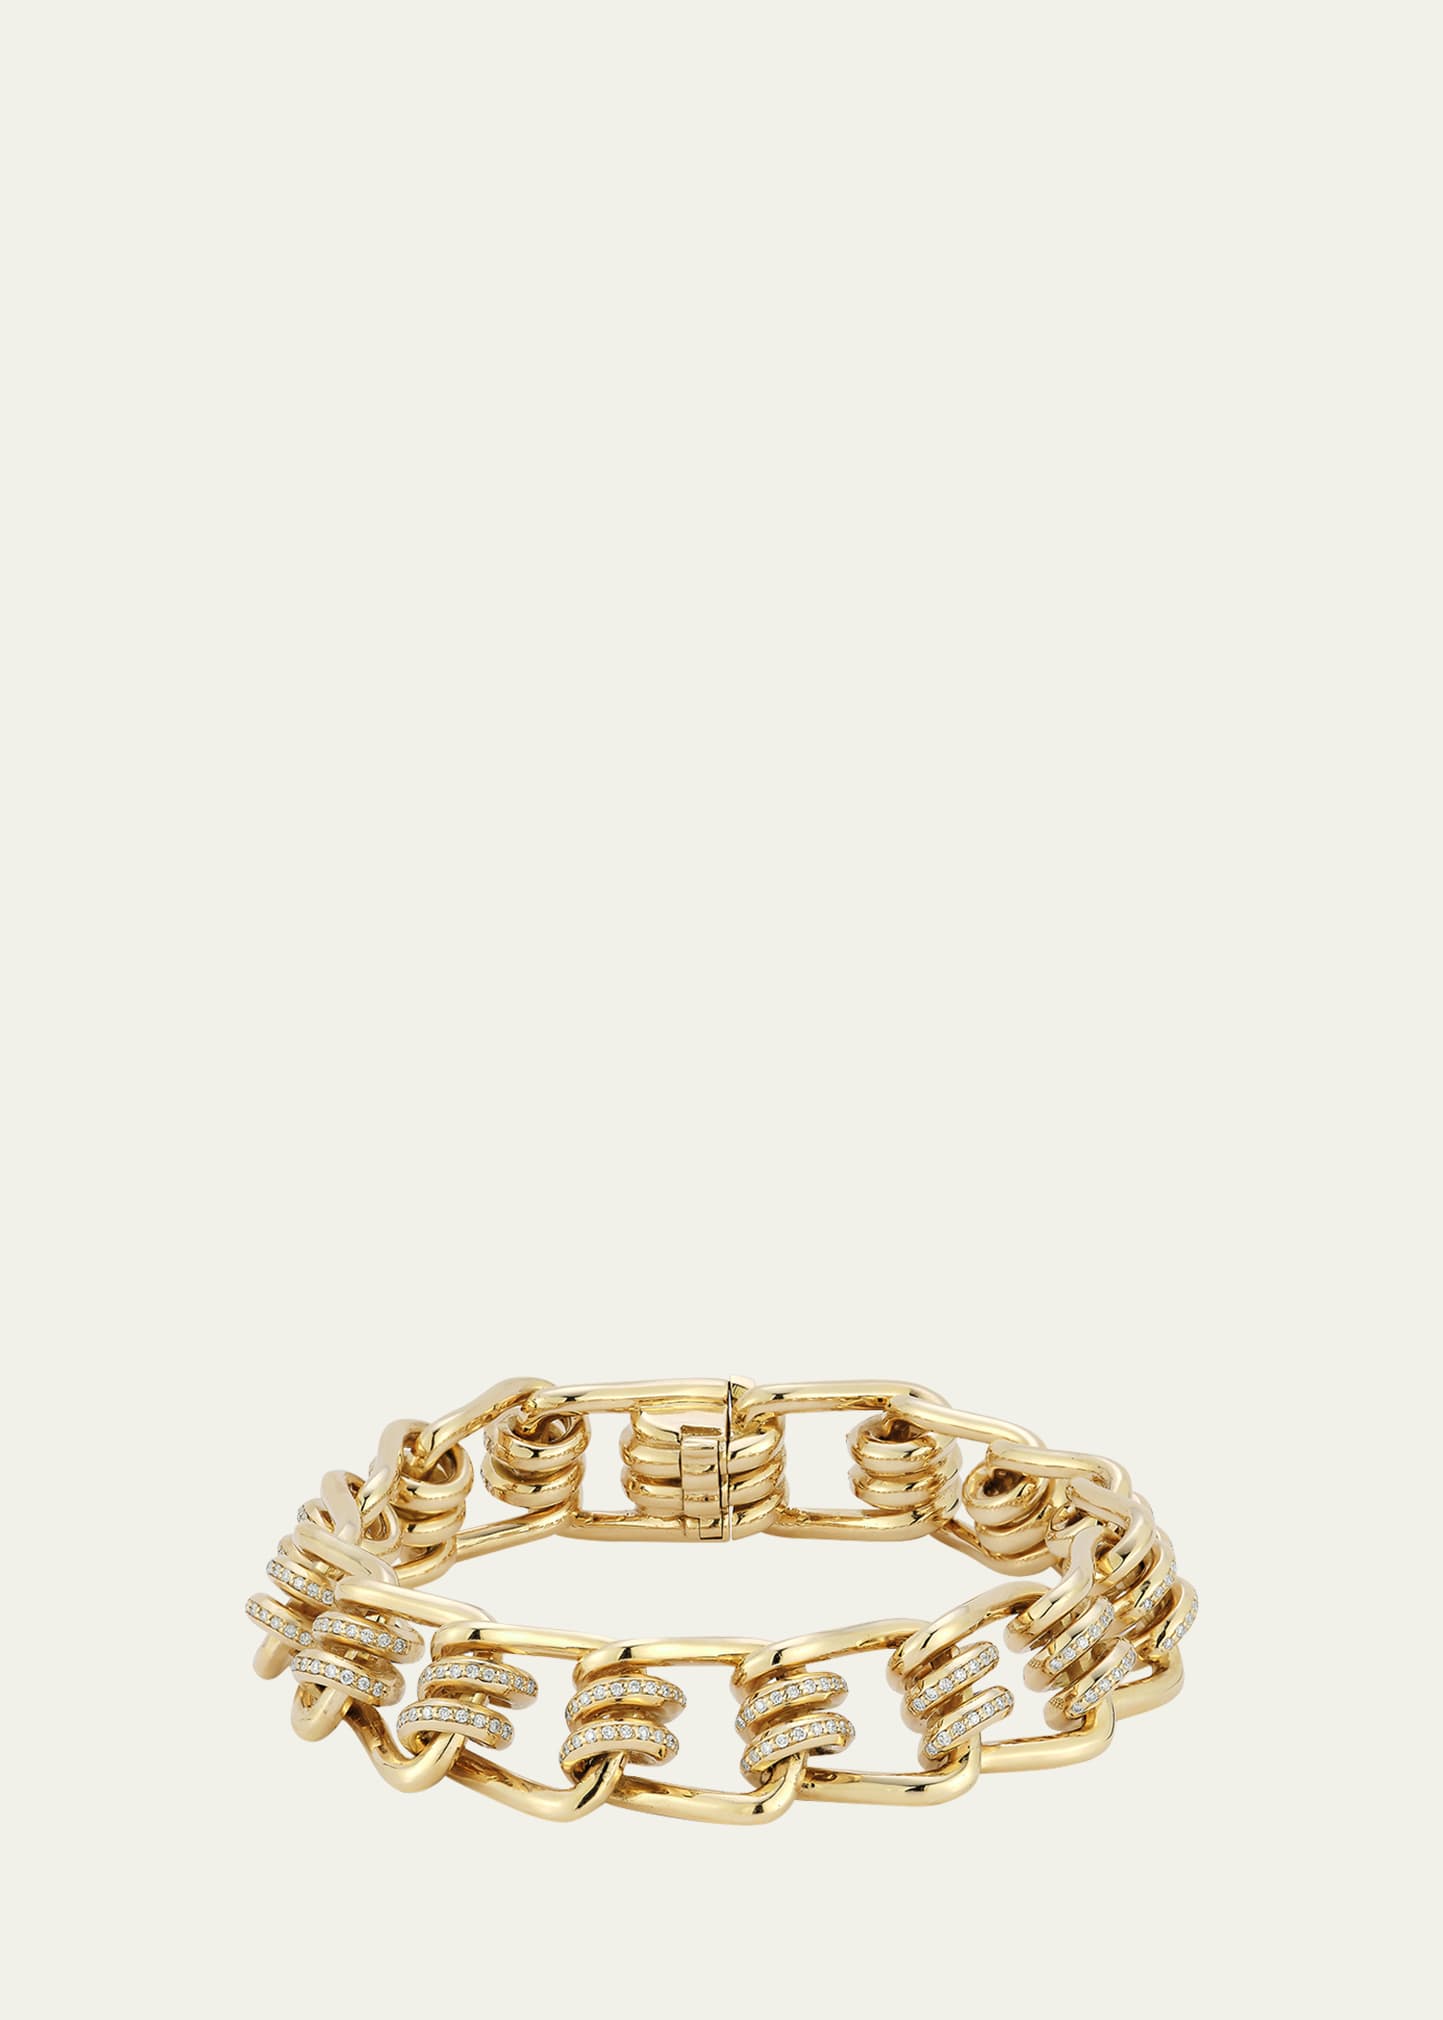 Huxley 18K Yellow Gold Diamond Coil Link Bracelet, Size 6.5